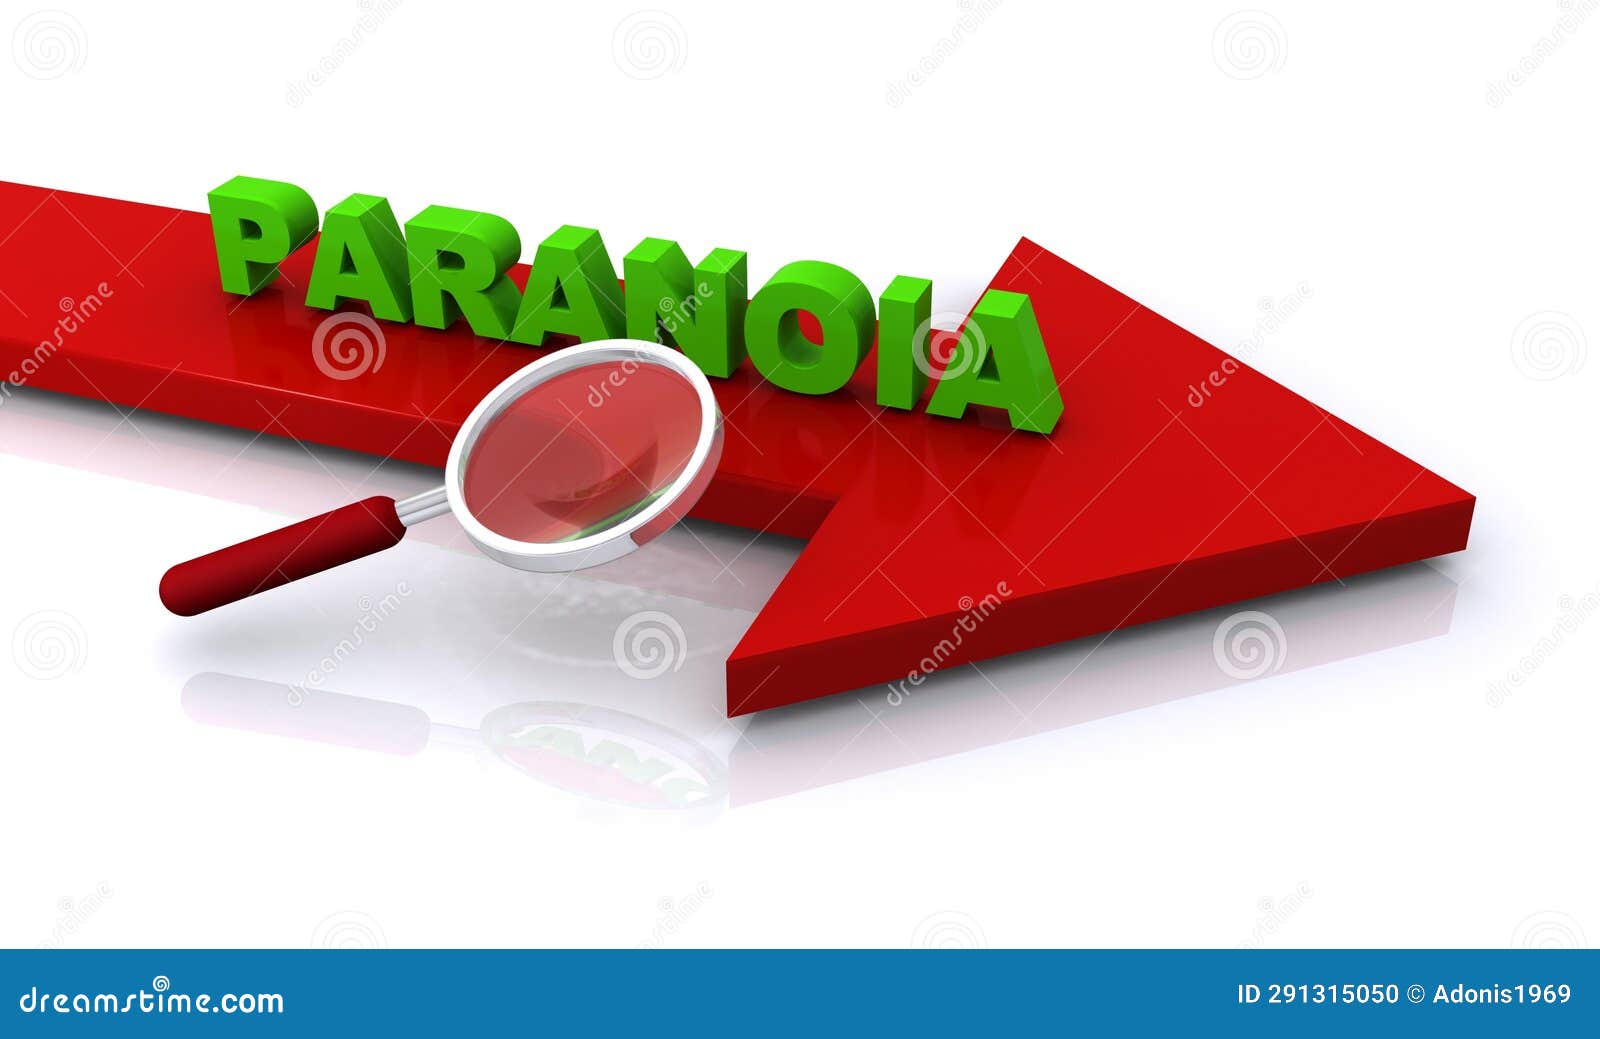 paranoia word on arrow and white